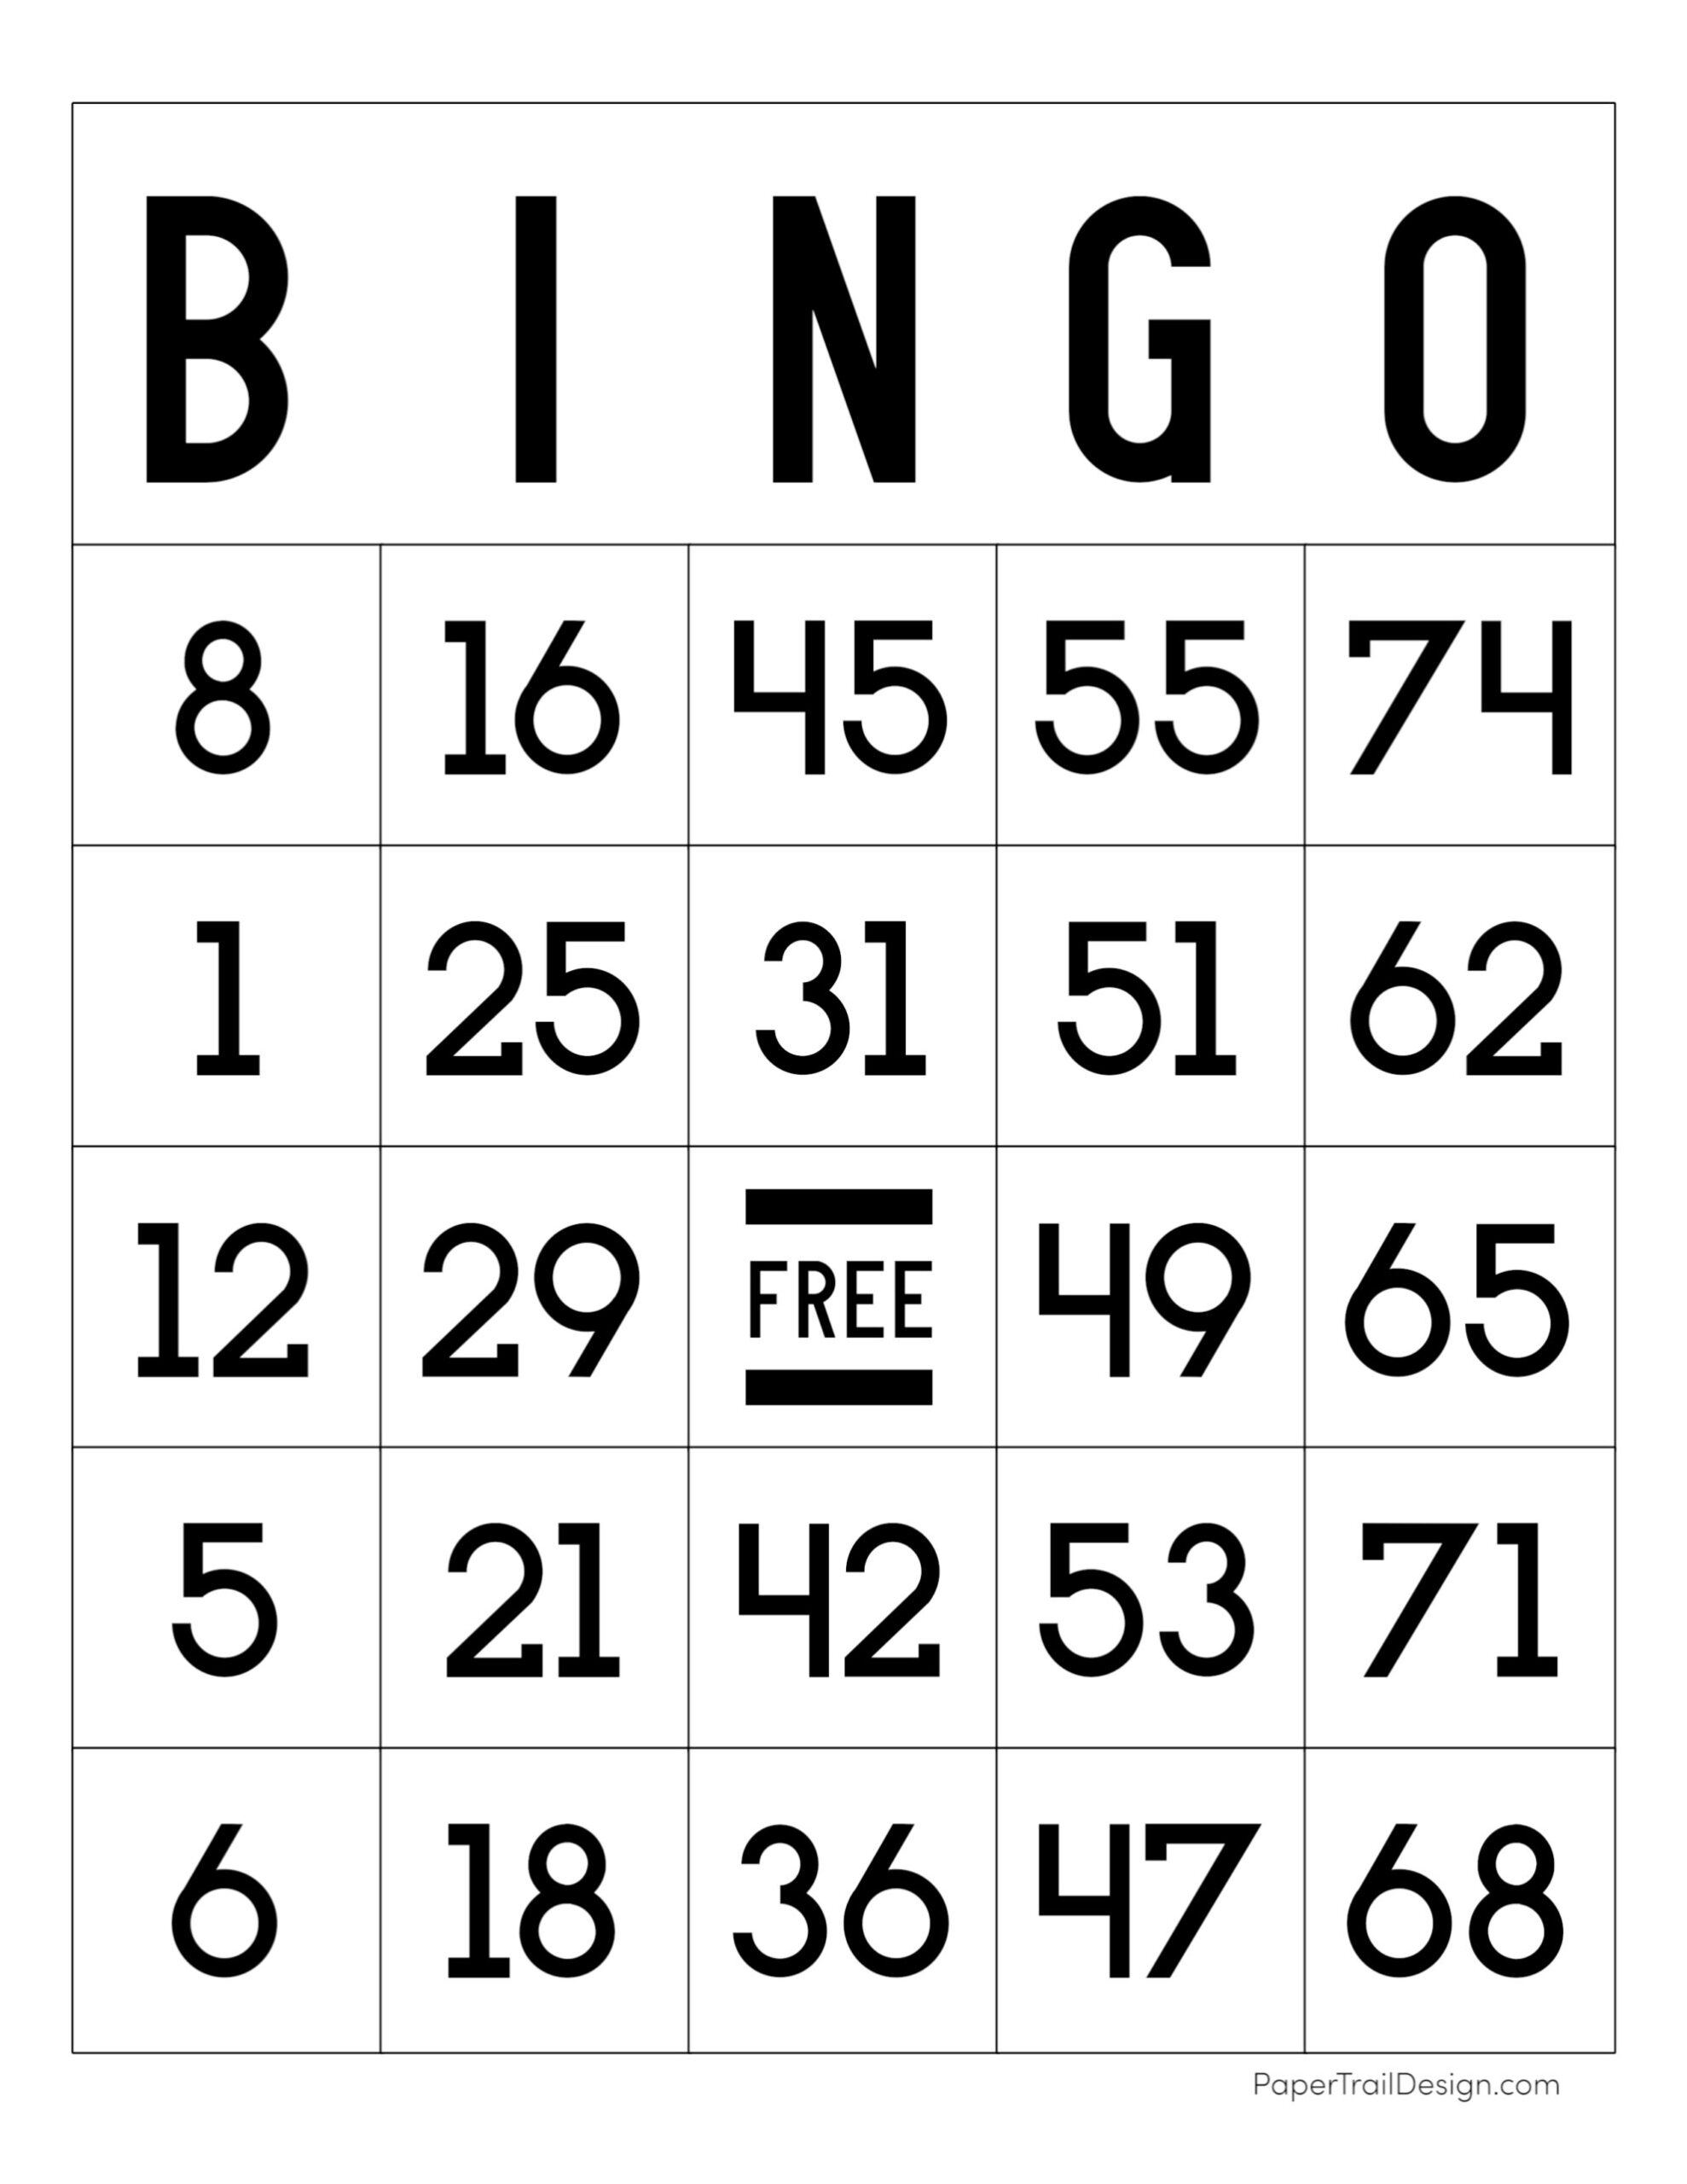 Free Printable Bingo Cards Paper Trail Design - Free Printable Bingo Cards and Call Sheet